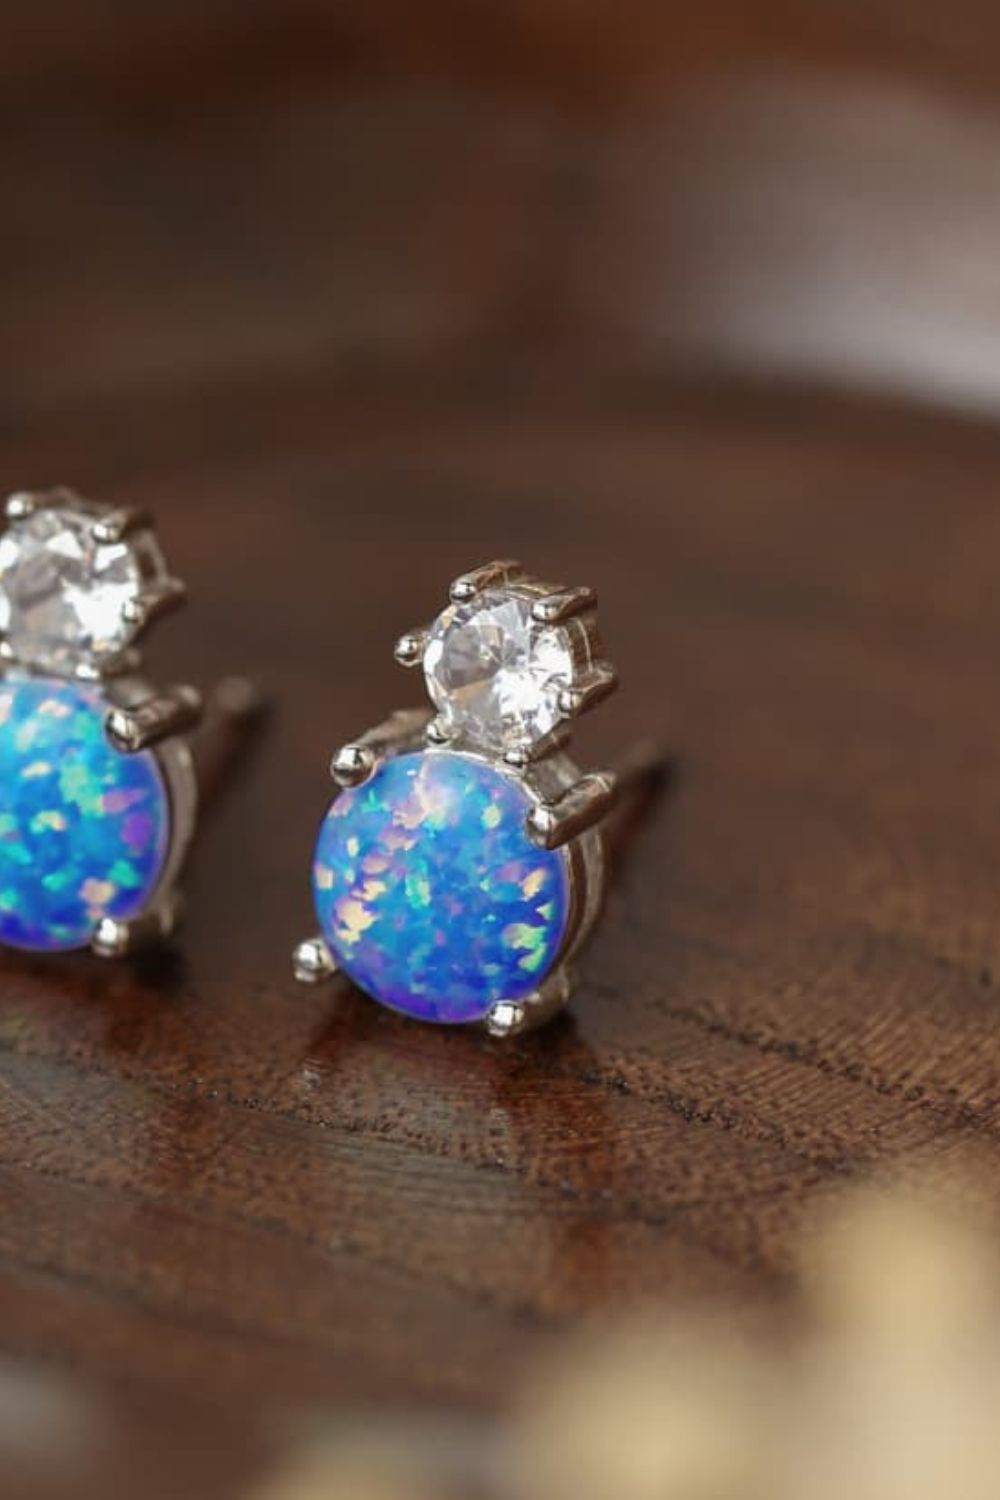 4-Prong Opal Stud Earrings - Earrings - FITGGINS